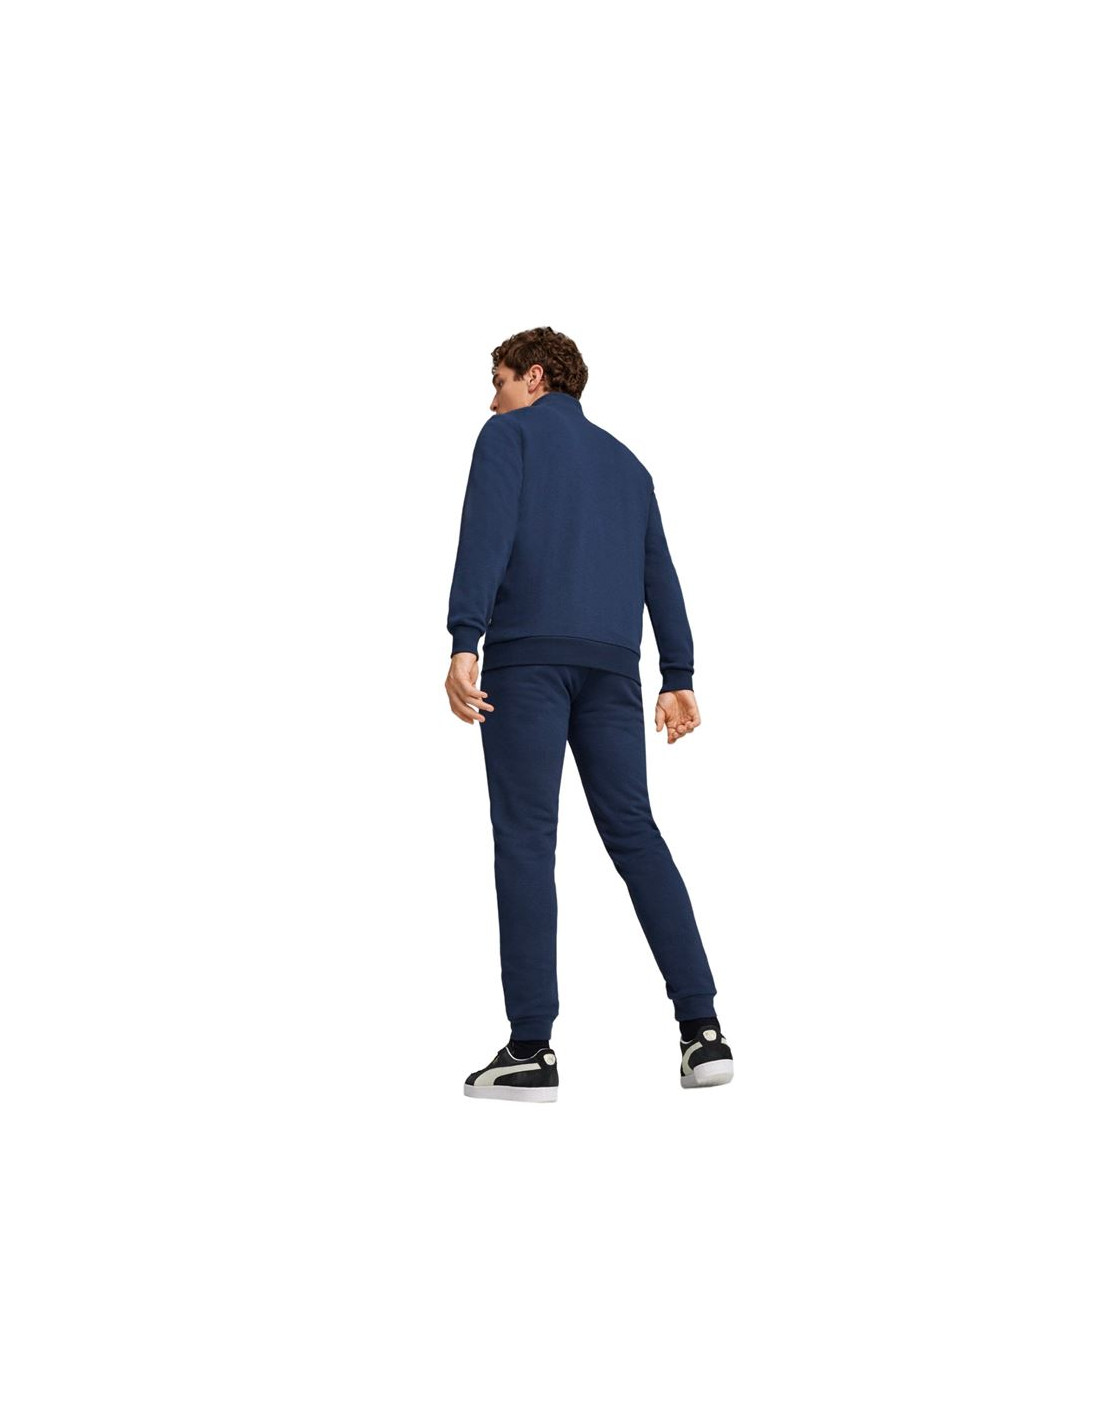 PUMA - Chándal azul marino Clean Sweat Suit 585841 06 Hombre